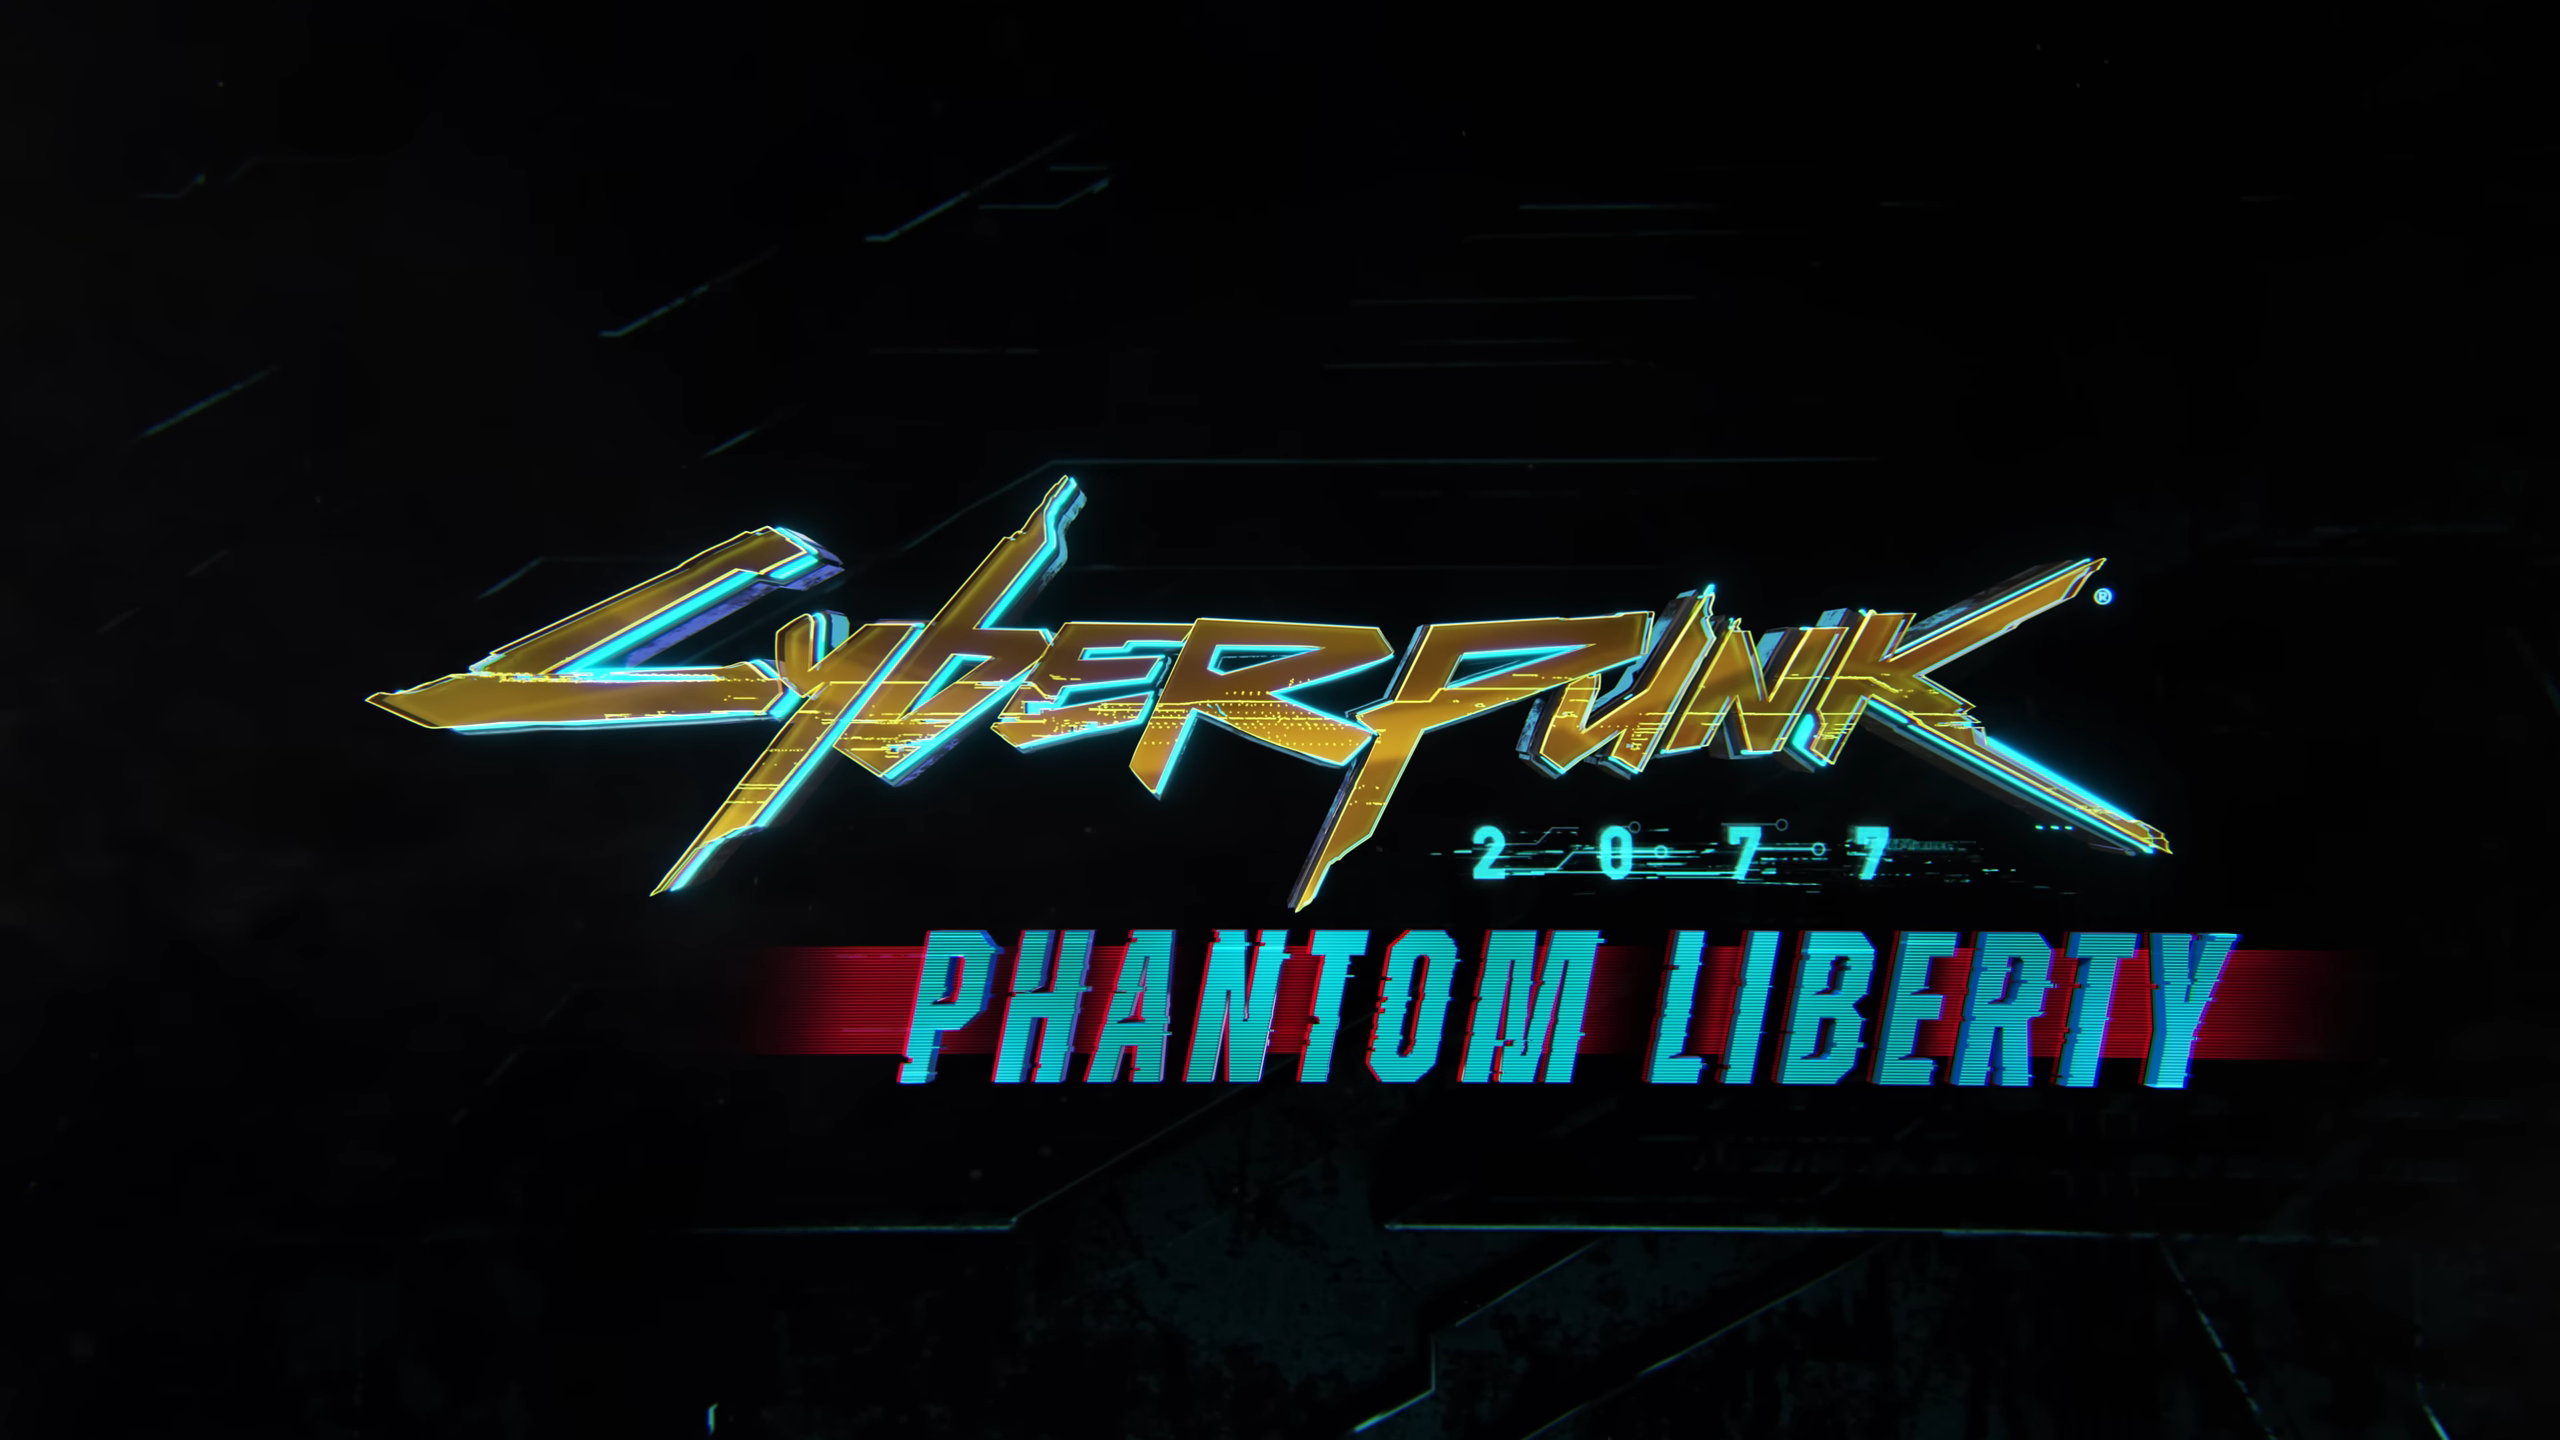 Immagine pubblicata in relazione al seguente contenuto: CD Projekt Red annuncia il DLC Phantom Liberty per Cyberpunk 2077 | Nome immagine: news33635_Cyberpunk-2077_Phantom-Liberty_Screenshot_1.png